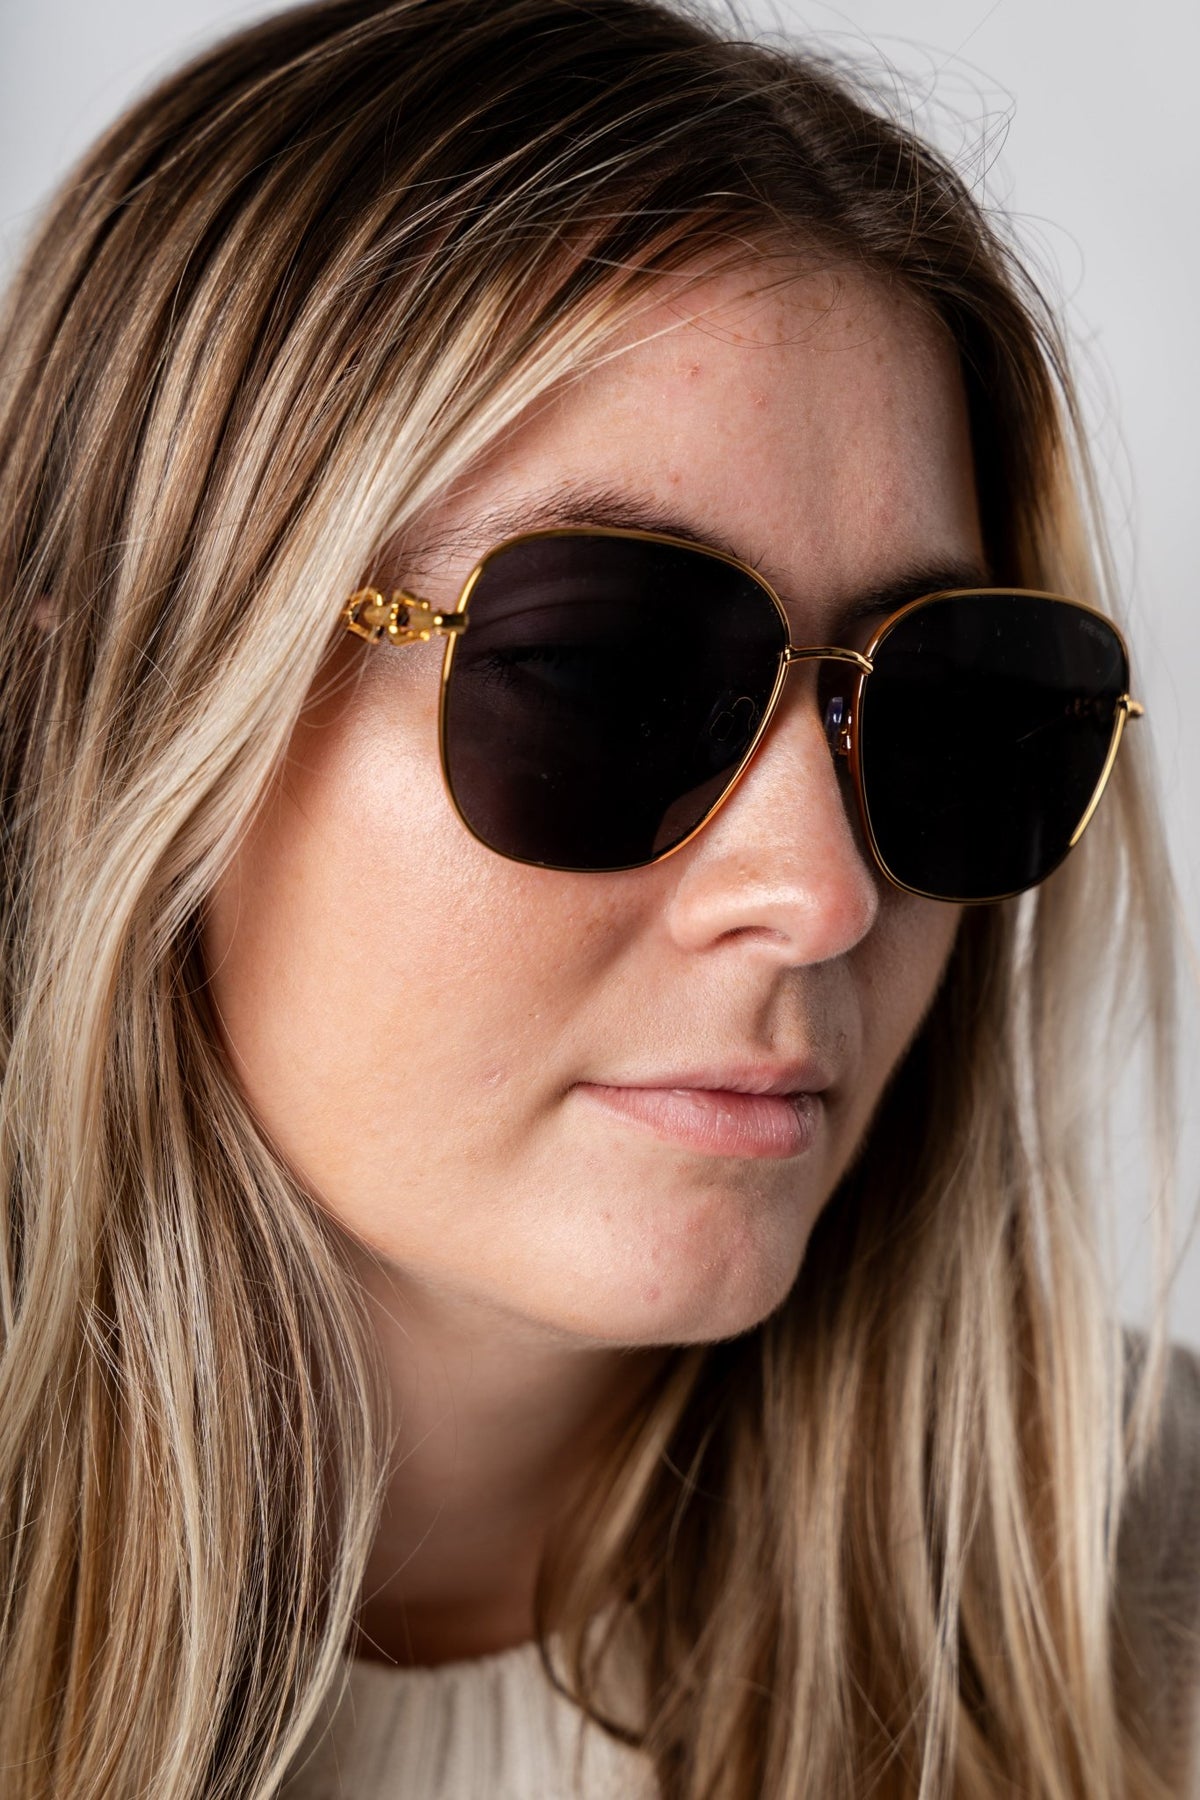 Freyrs Lea sunglasses gold/gray - Stylish Sunglasses - Trendy Glasses at Lush Fashion Lounge Boutique in Oklahoma